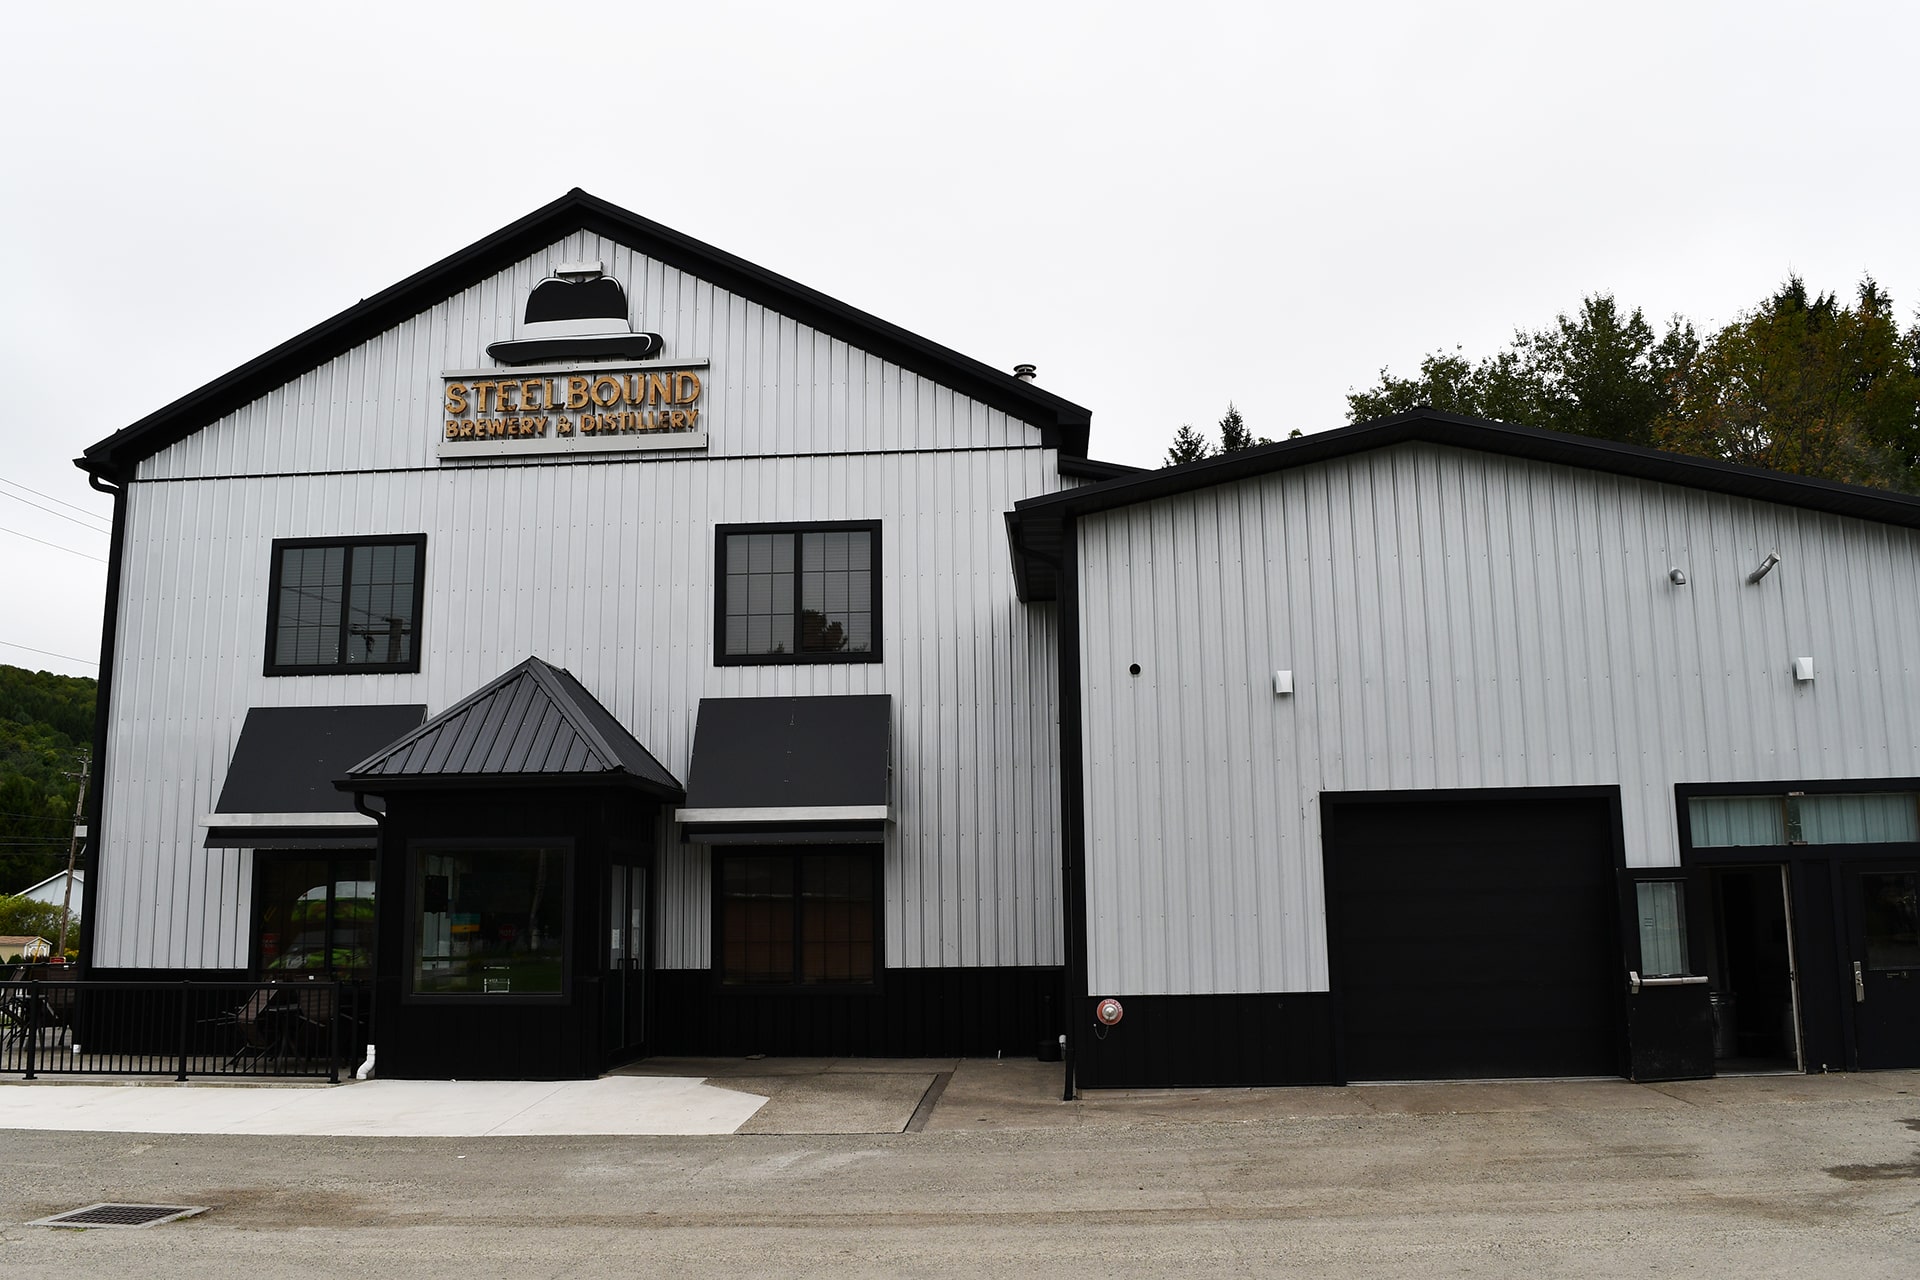 Steelbound Brewery and Distillery - Buffalocal